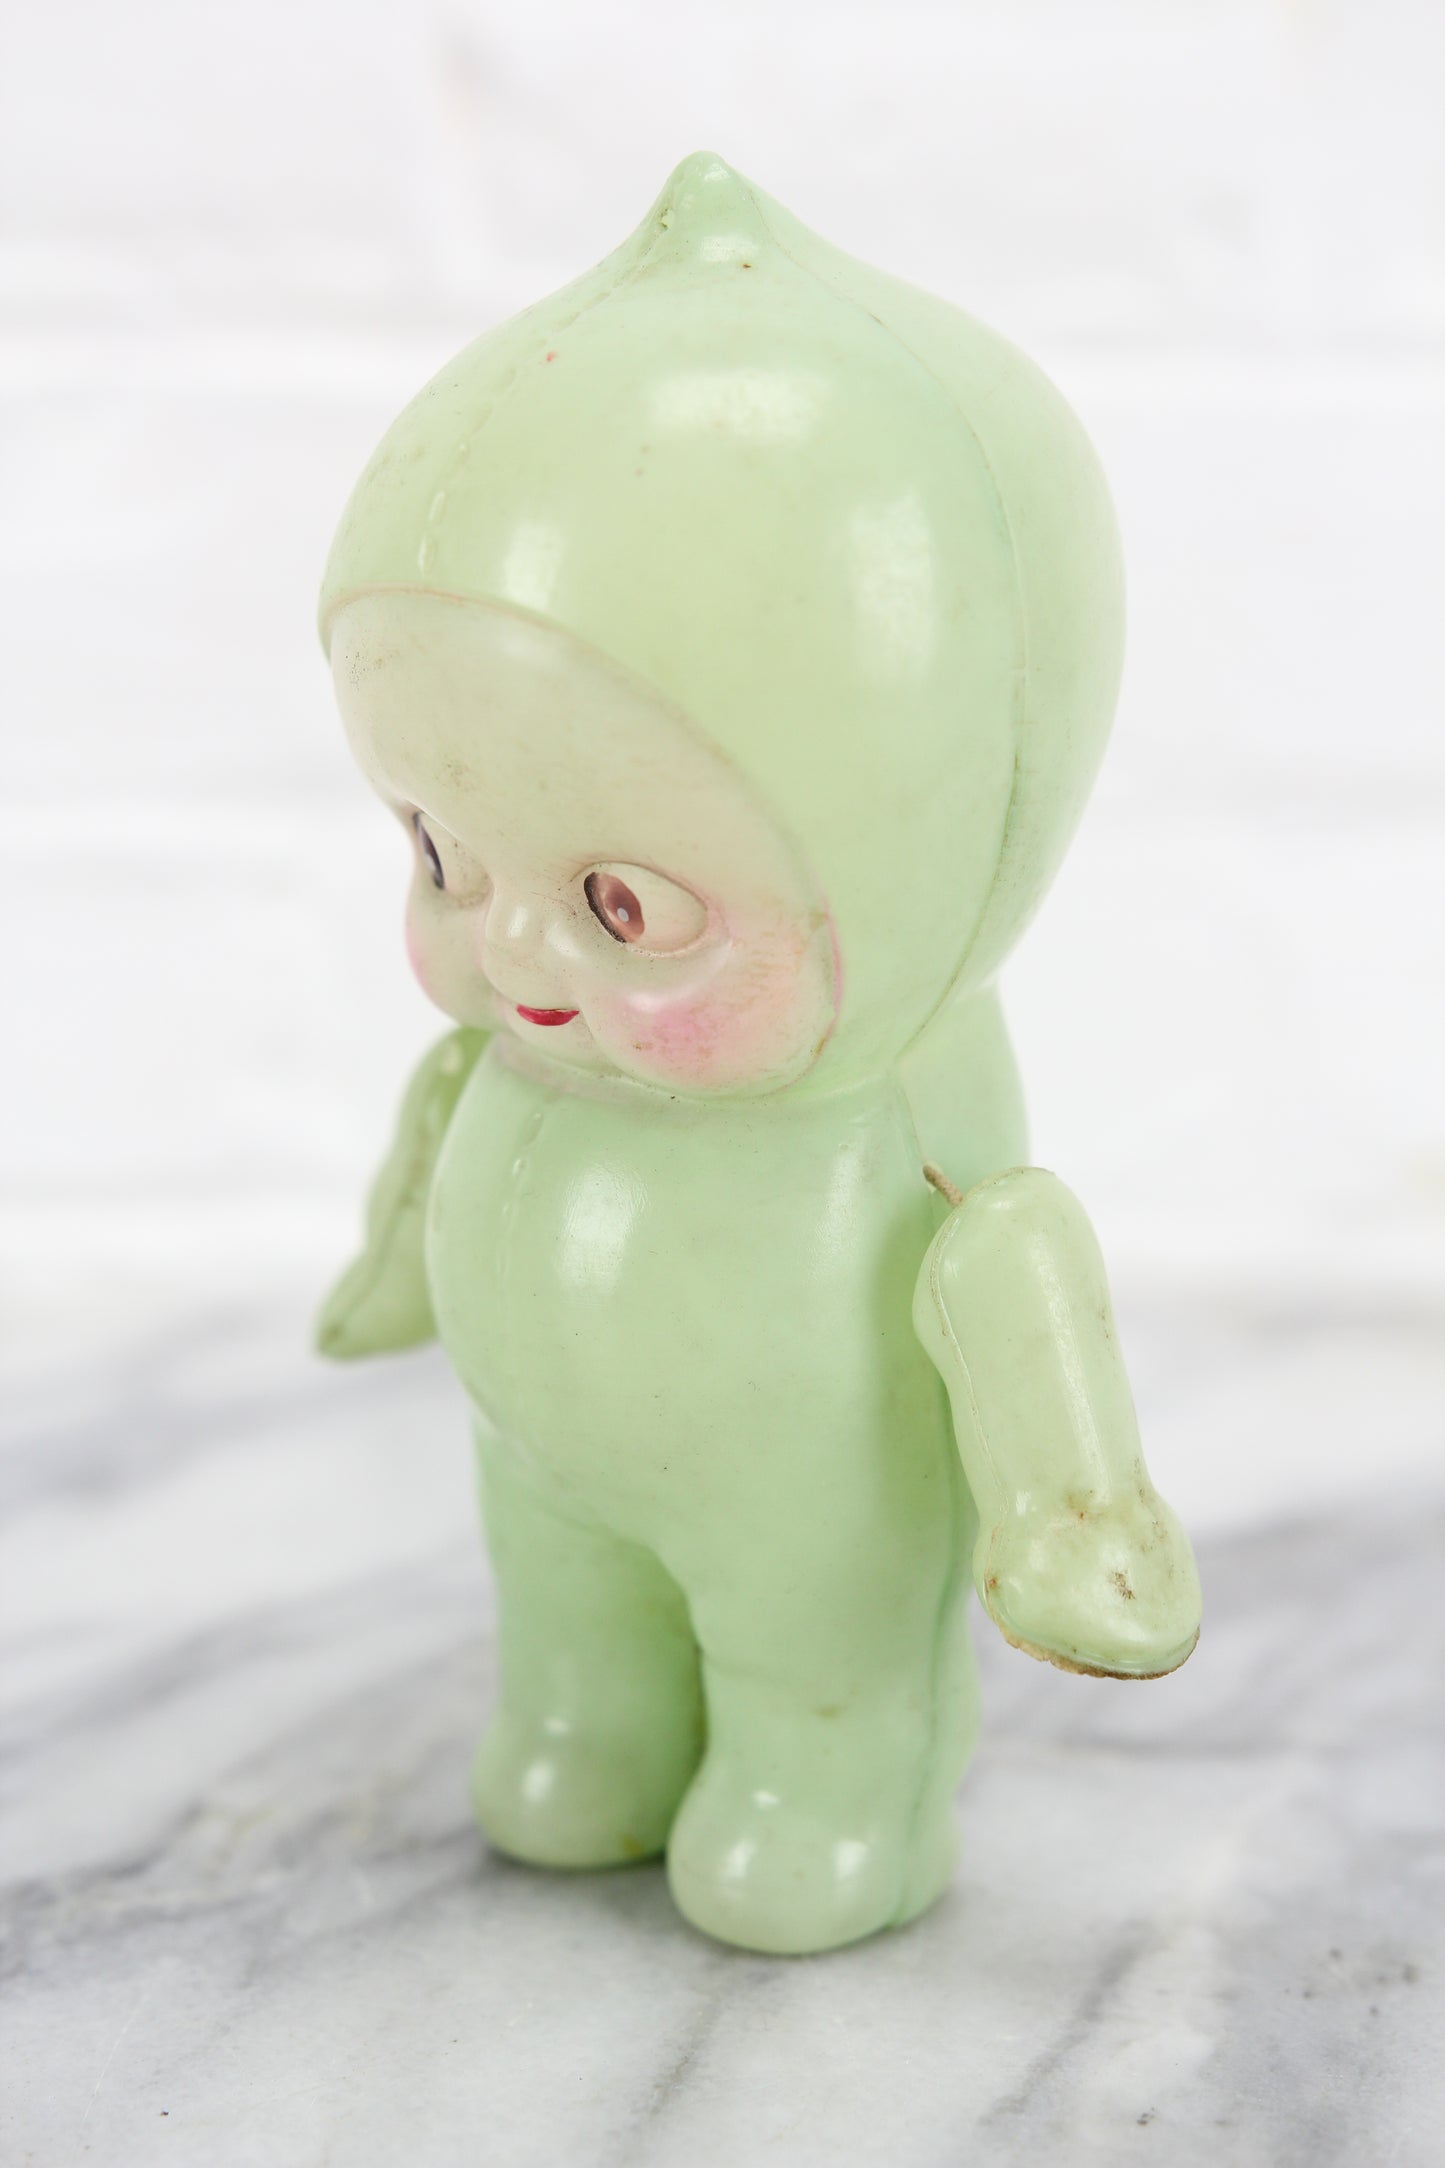 Green Celluloid Kewpie Doll Rattle, Made in Japan, 6"